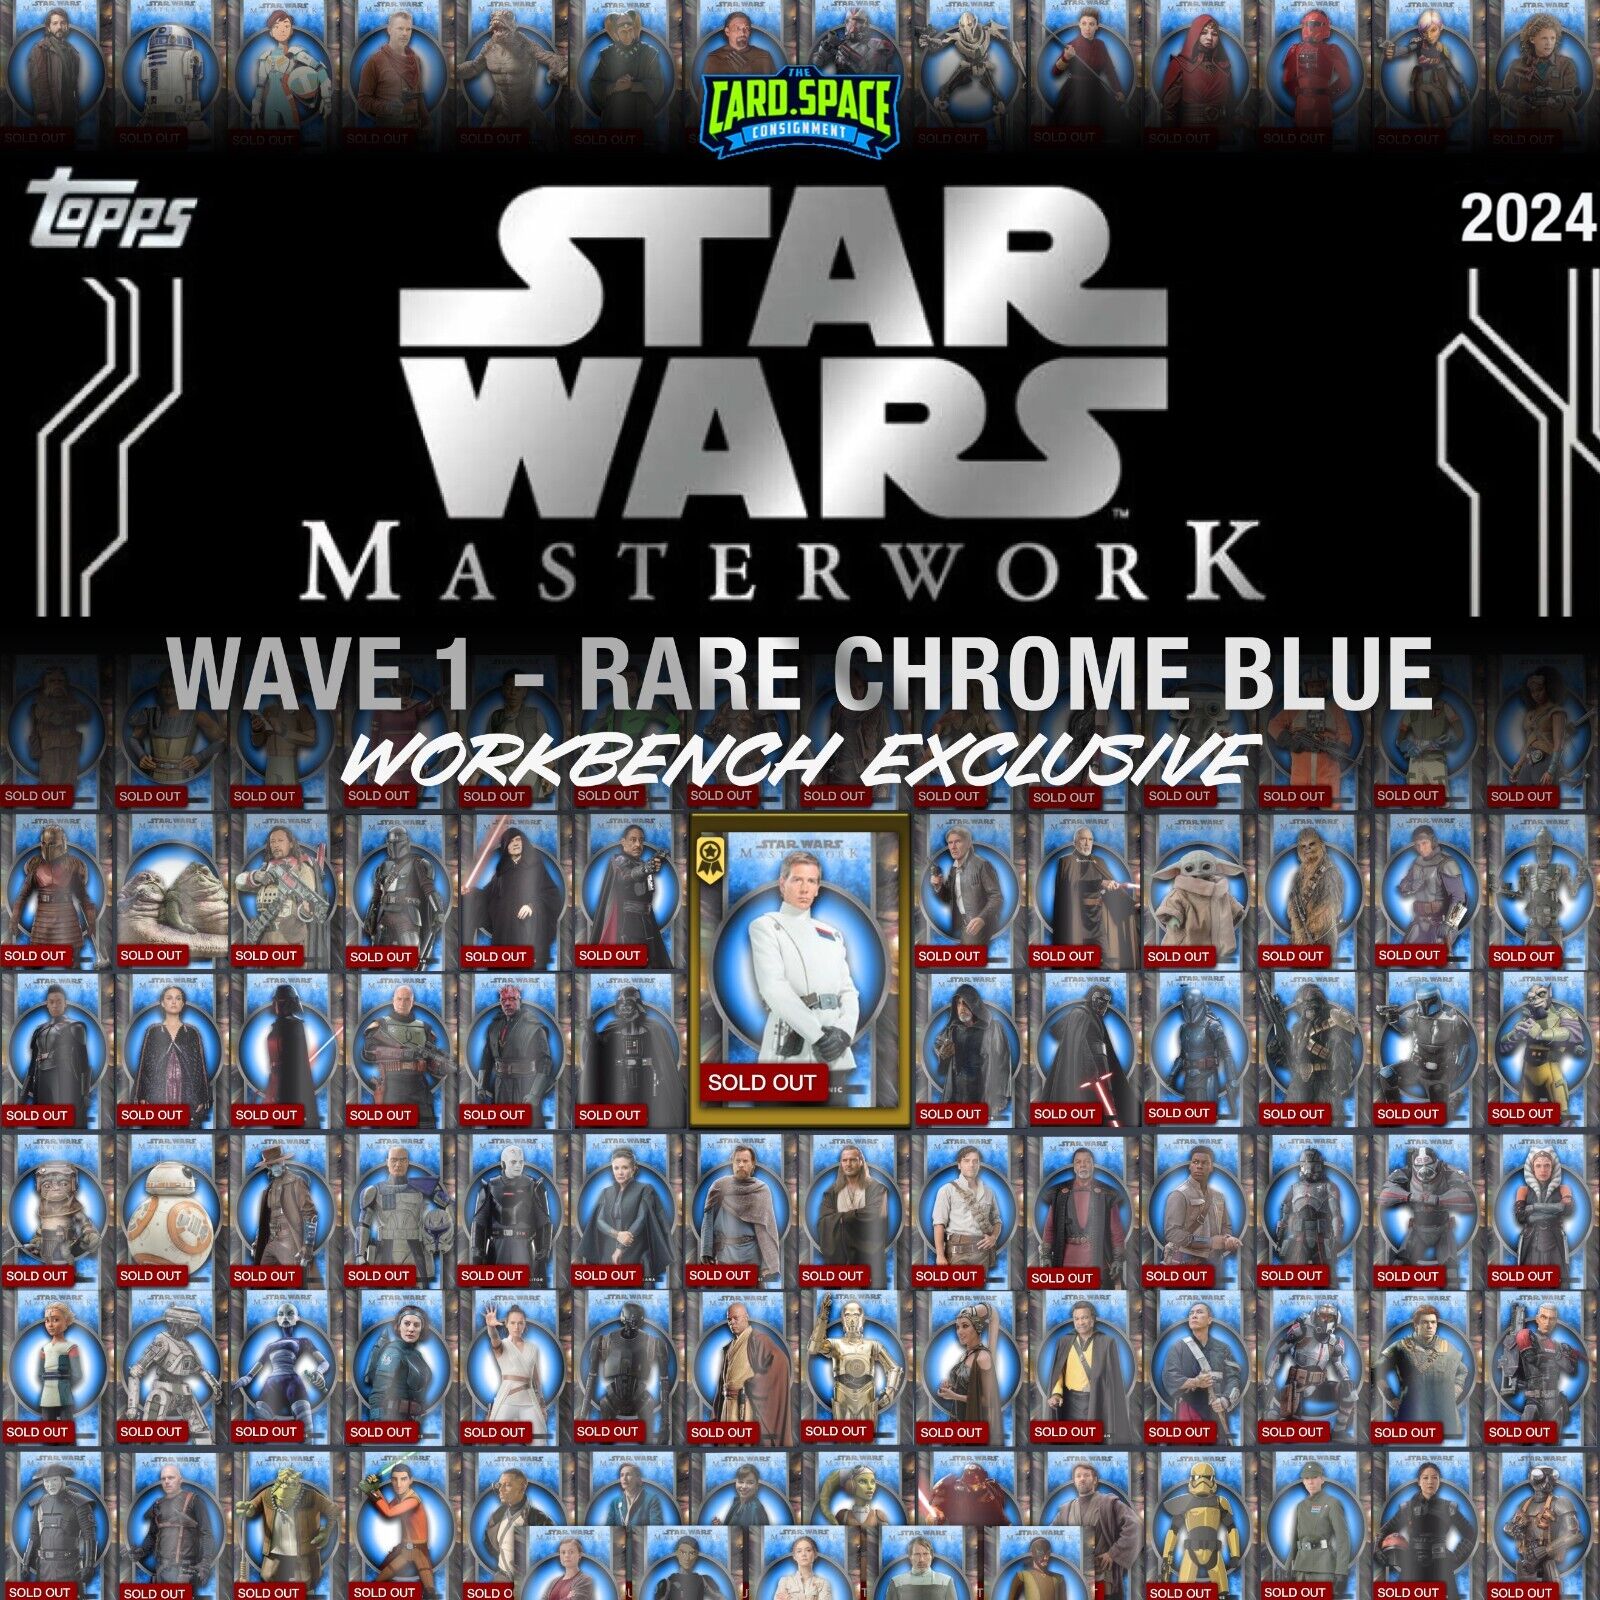 100 CARDS - FULL WORKBENCH SET & REWARD CARD - Topps Star Wars Masterwork CHROME